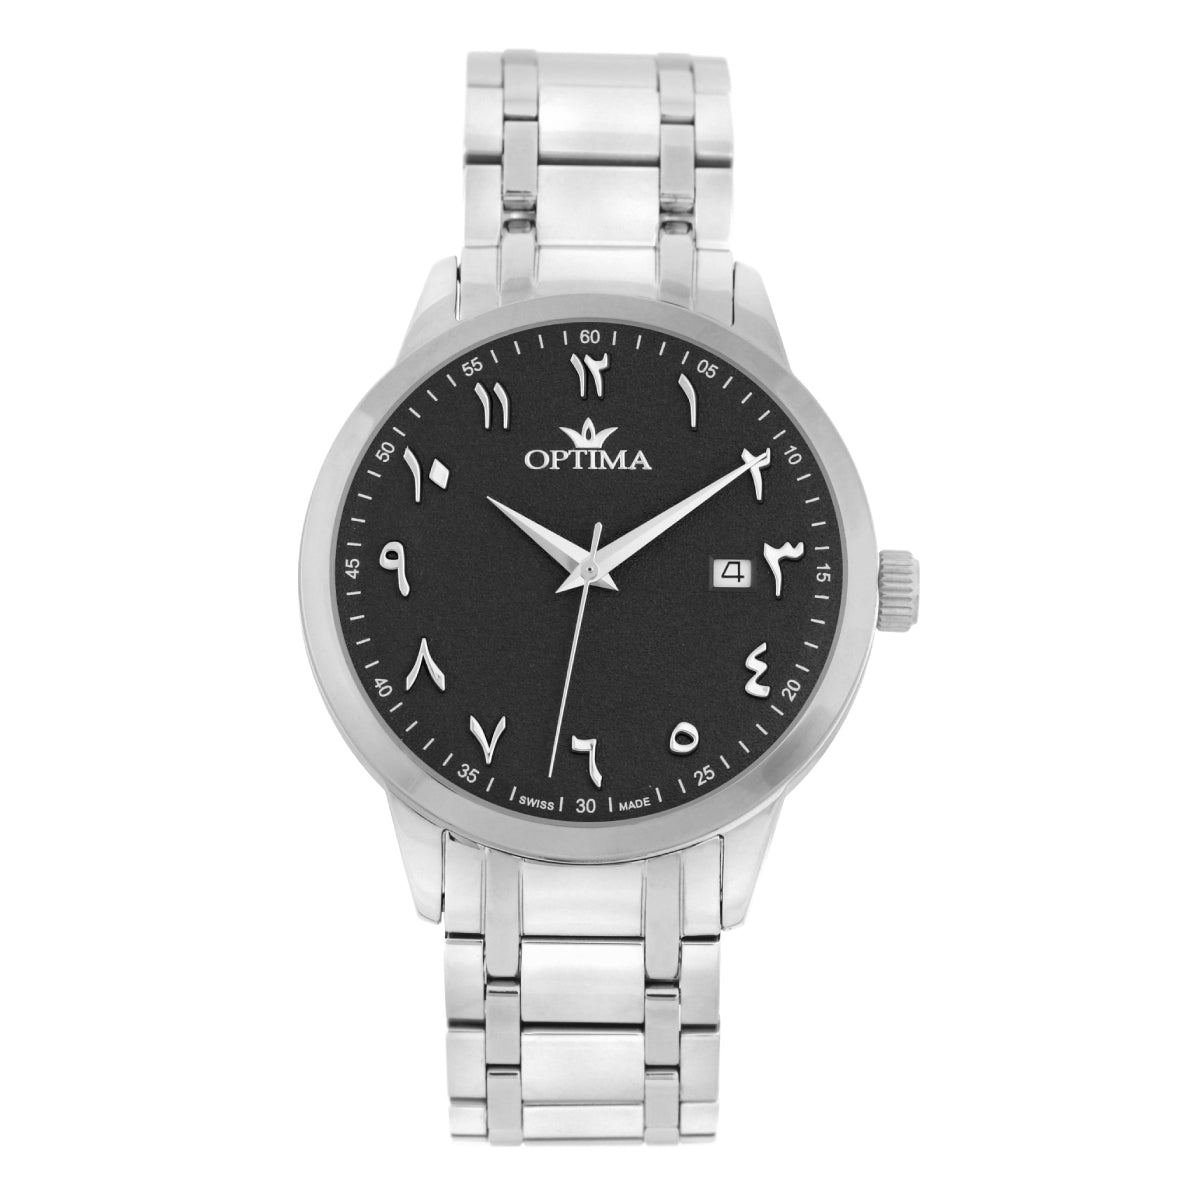 Optima Men's Swiss Quartz Watch with Black Dial - OPT-0054